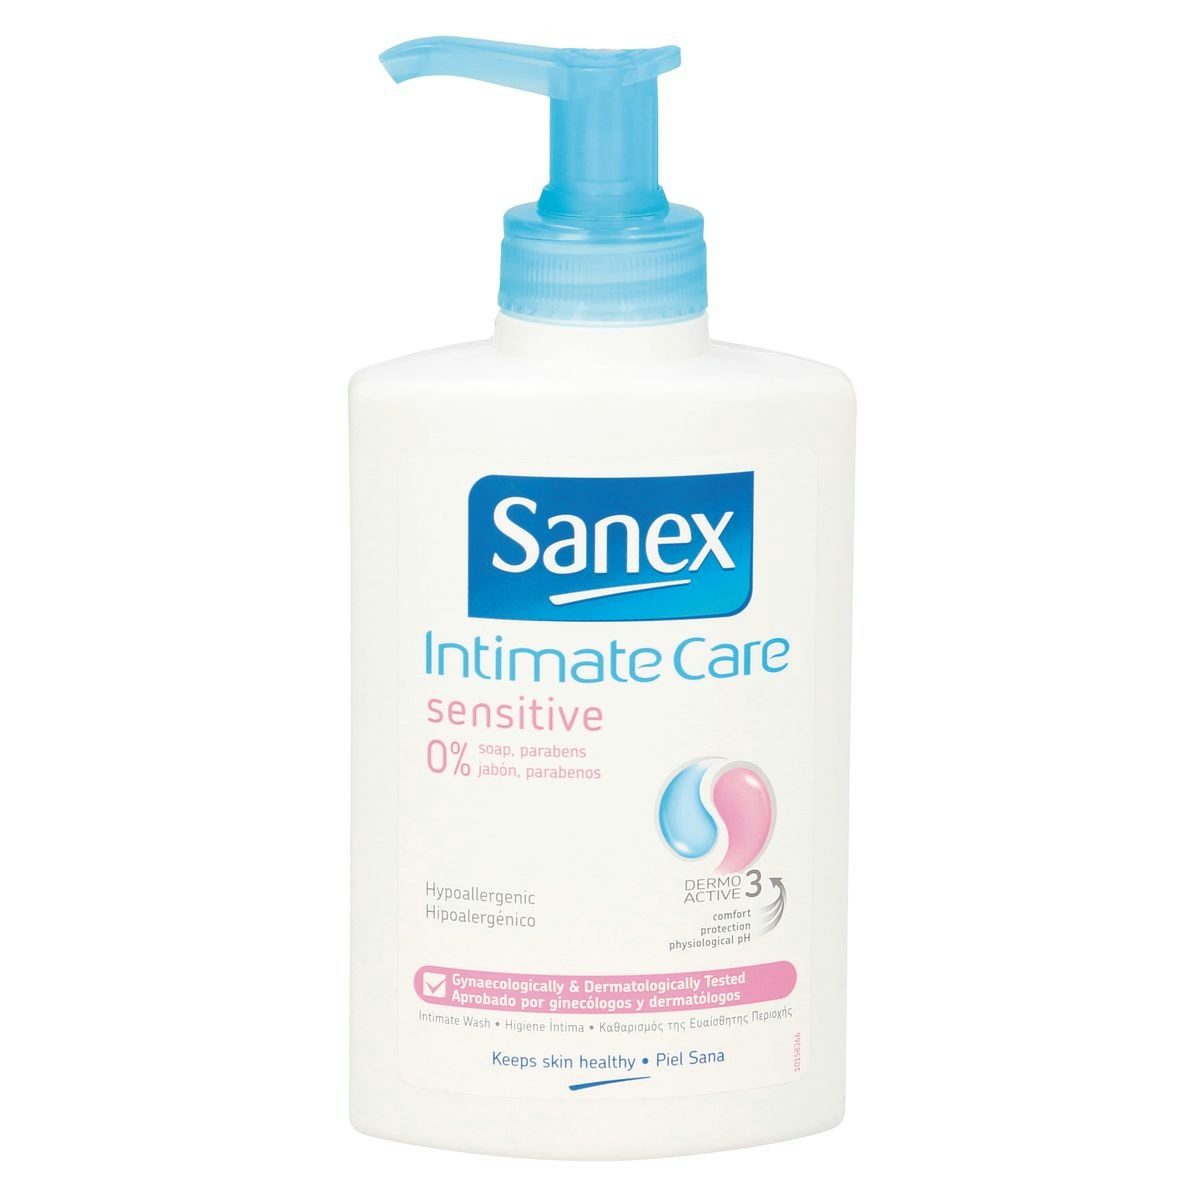 Gel de higiene íntima SANEX sensitive dosificador 250 ml